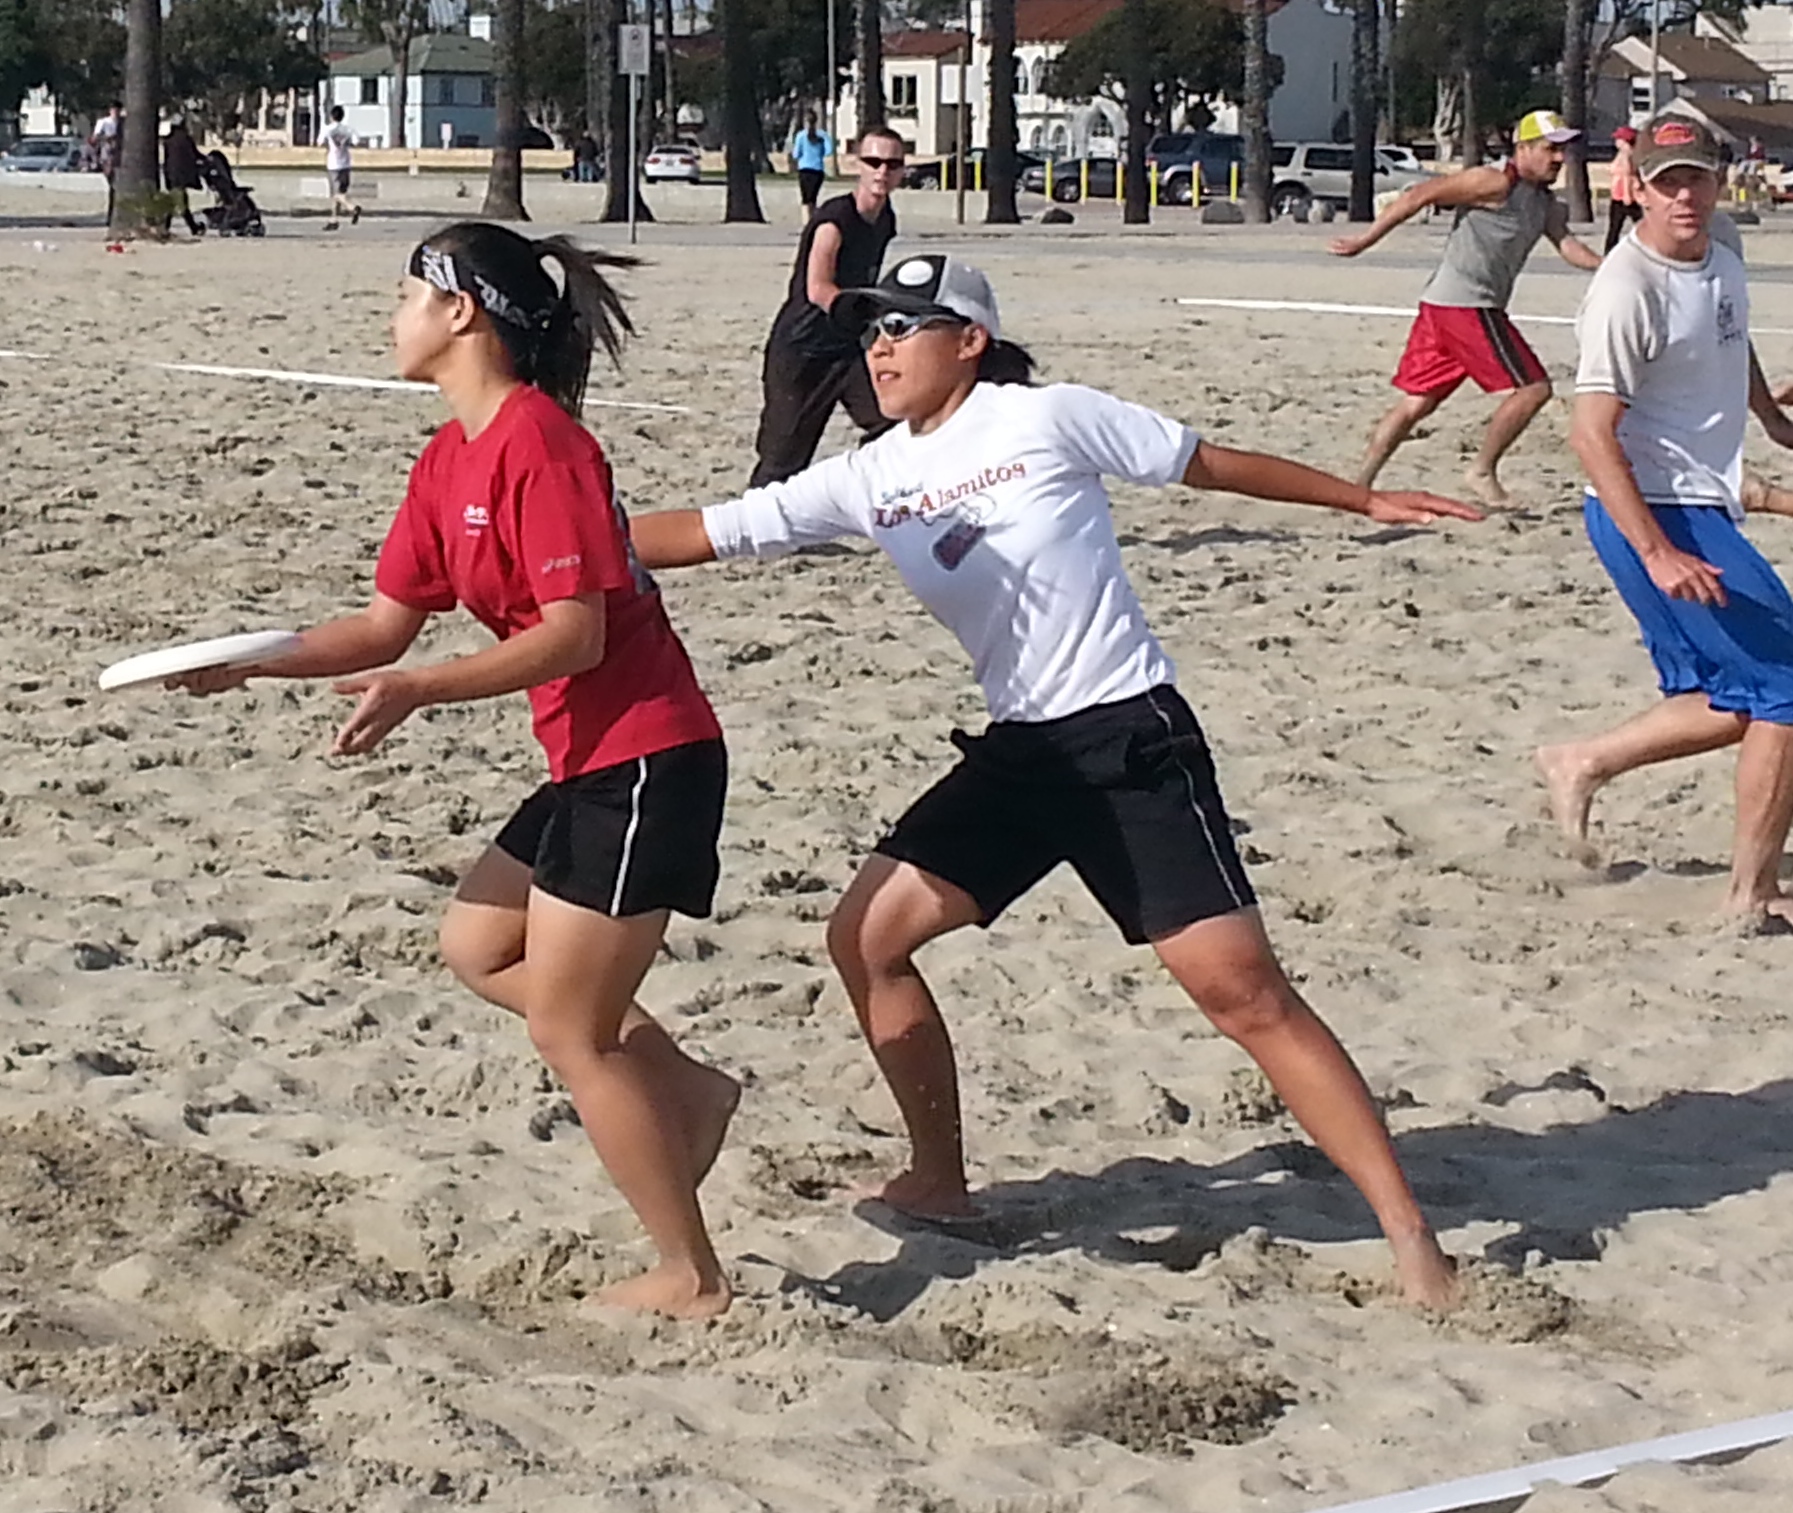 Summer 5on5 Coed Beach Ultimate Frisbee League in Long Beach